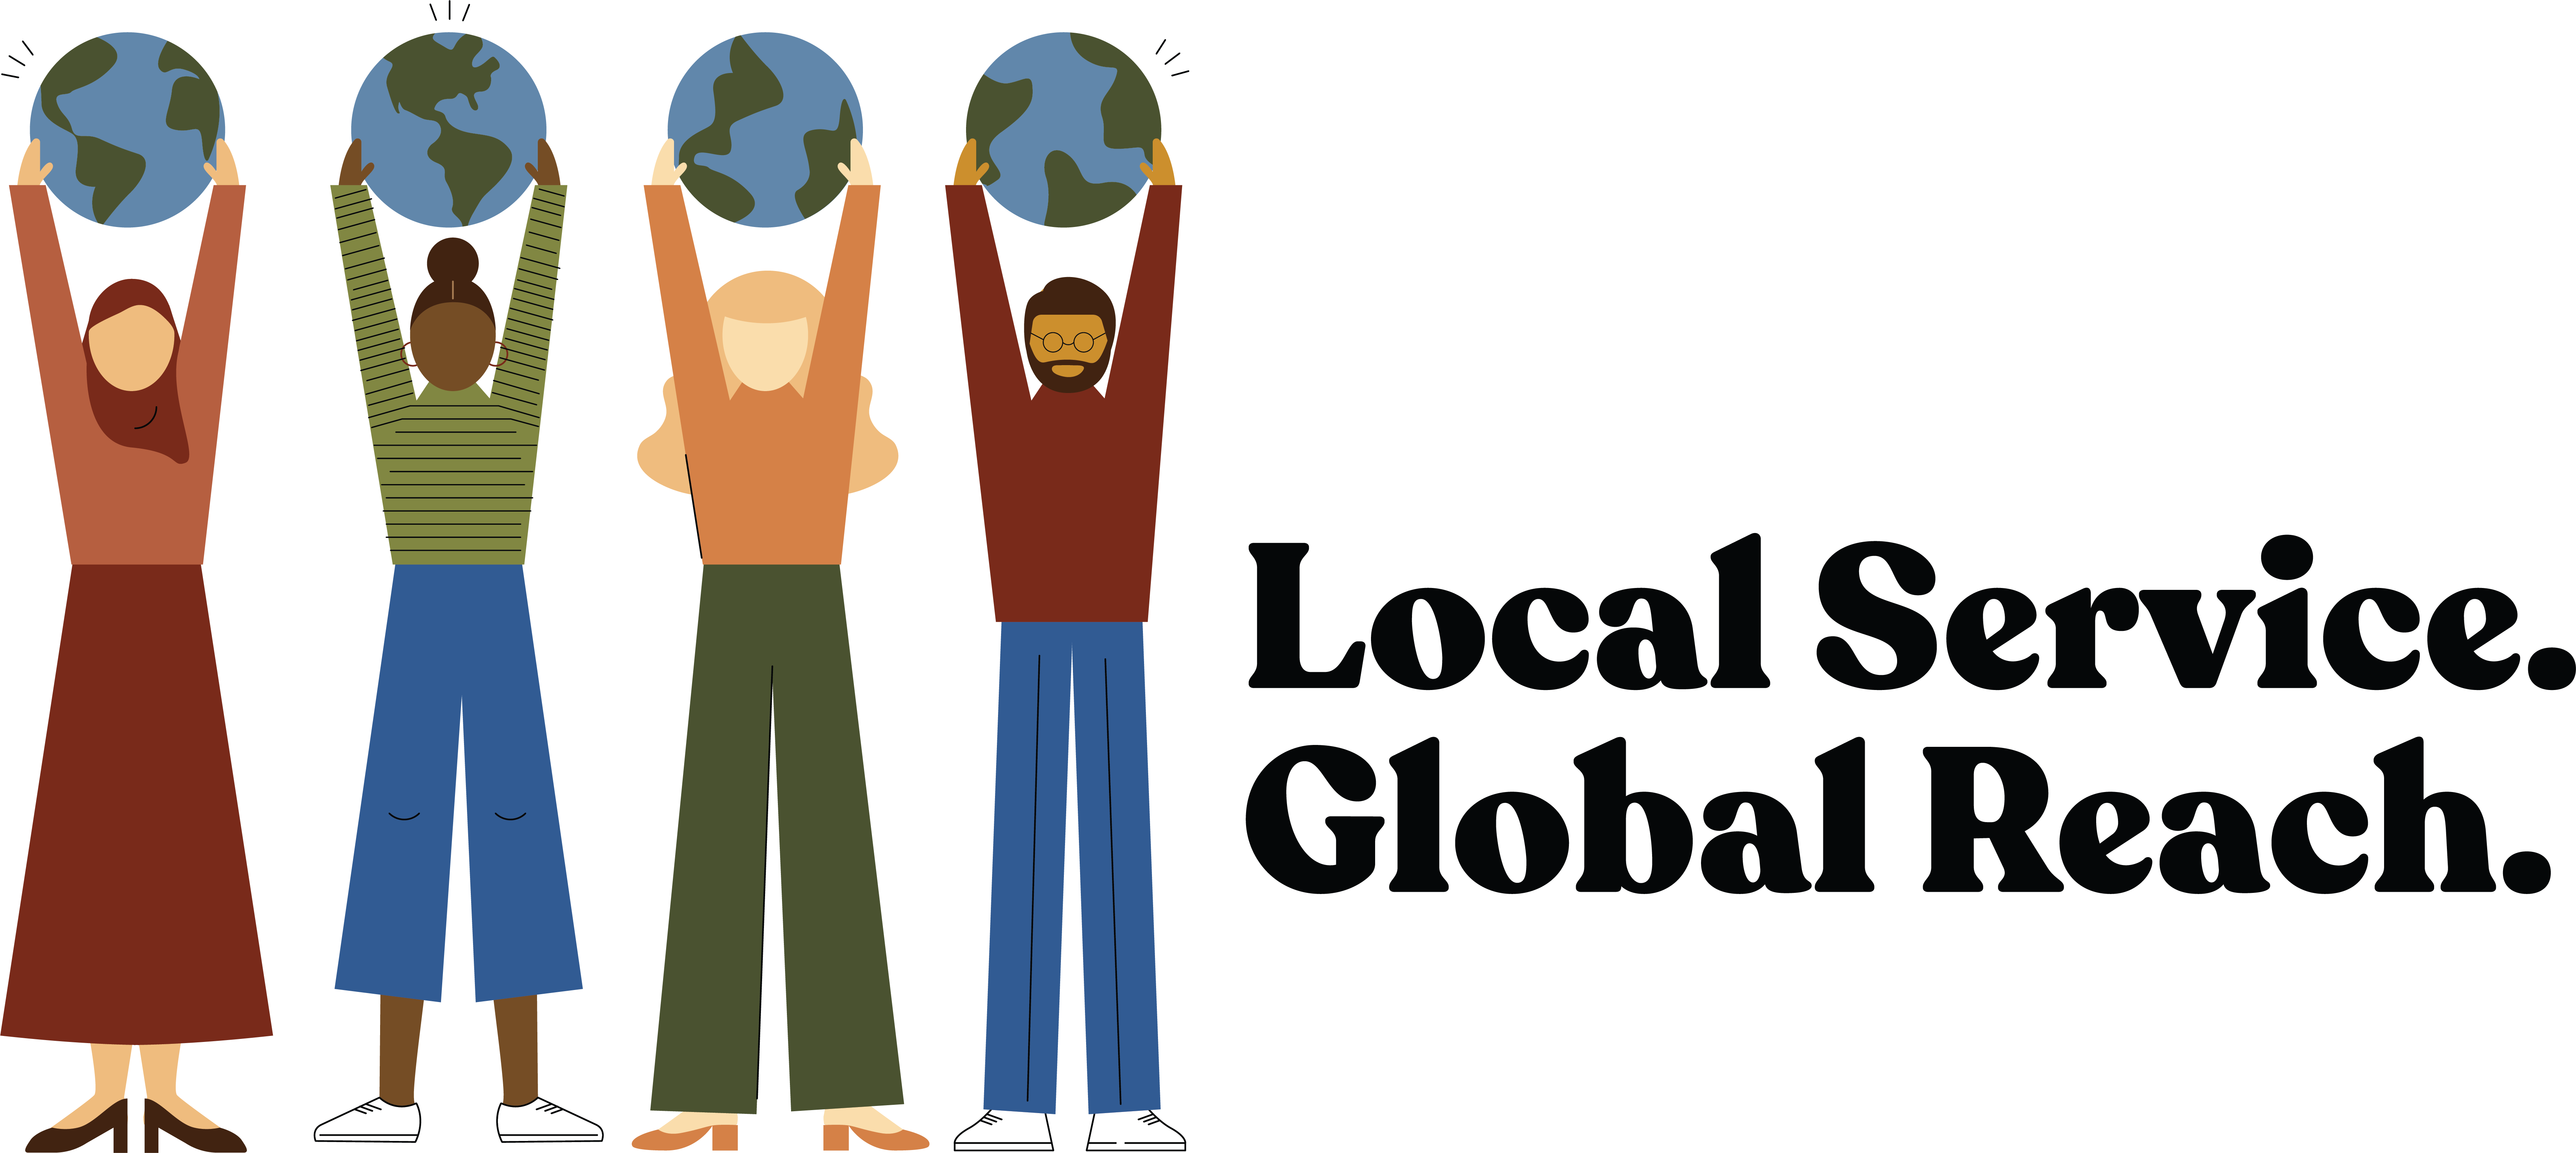 Local Service. Global Reach. 